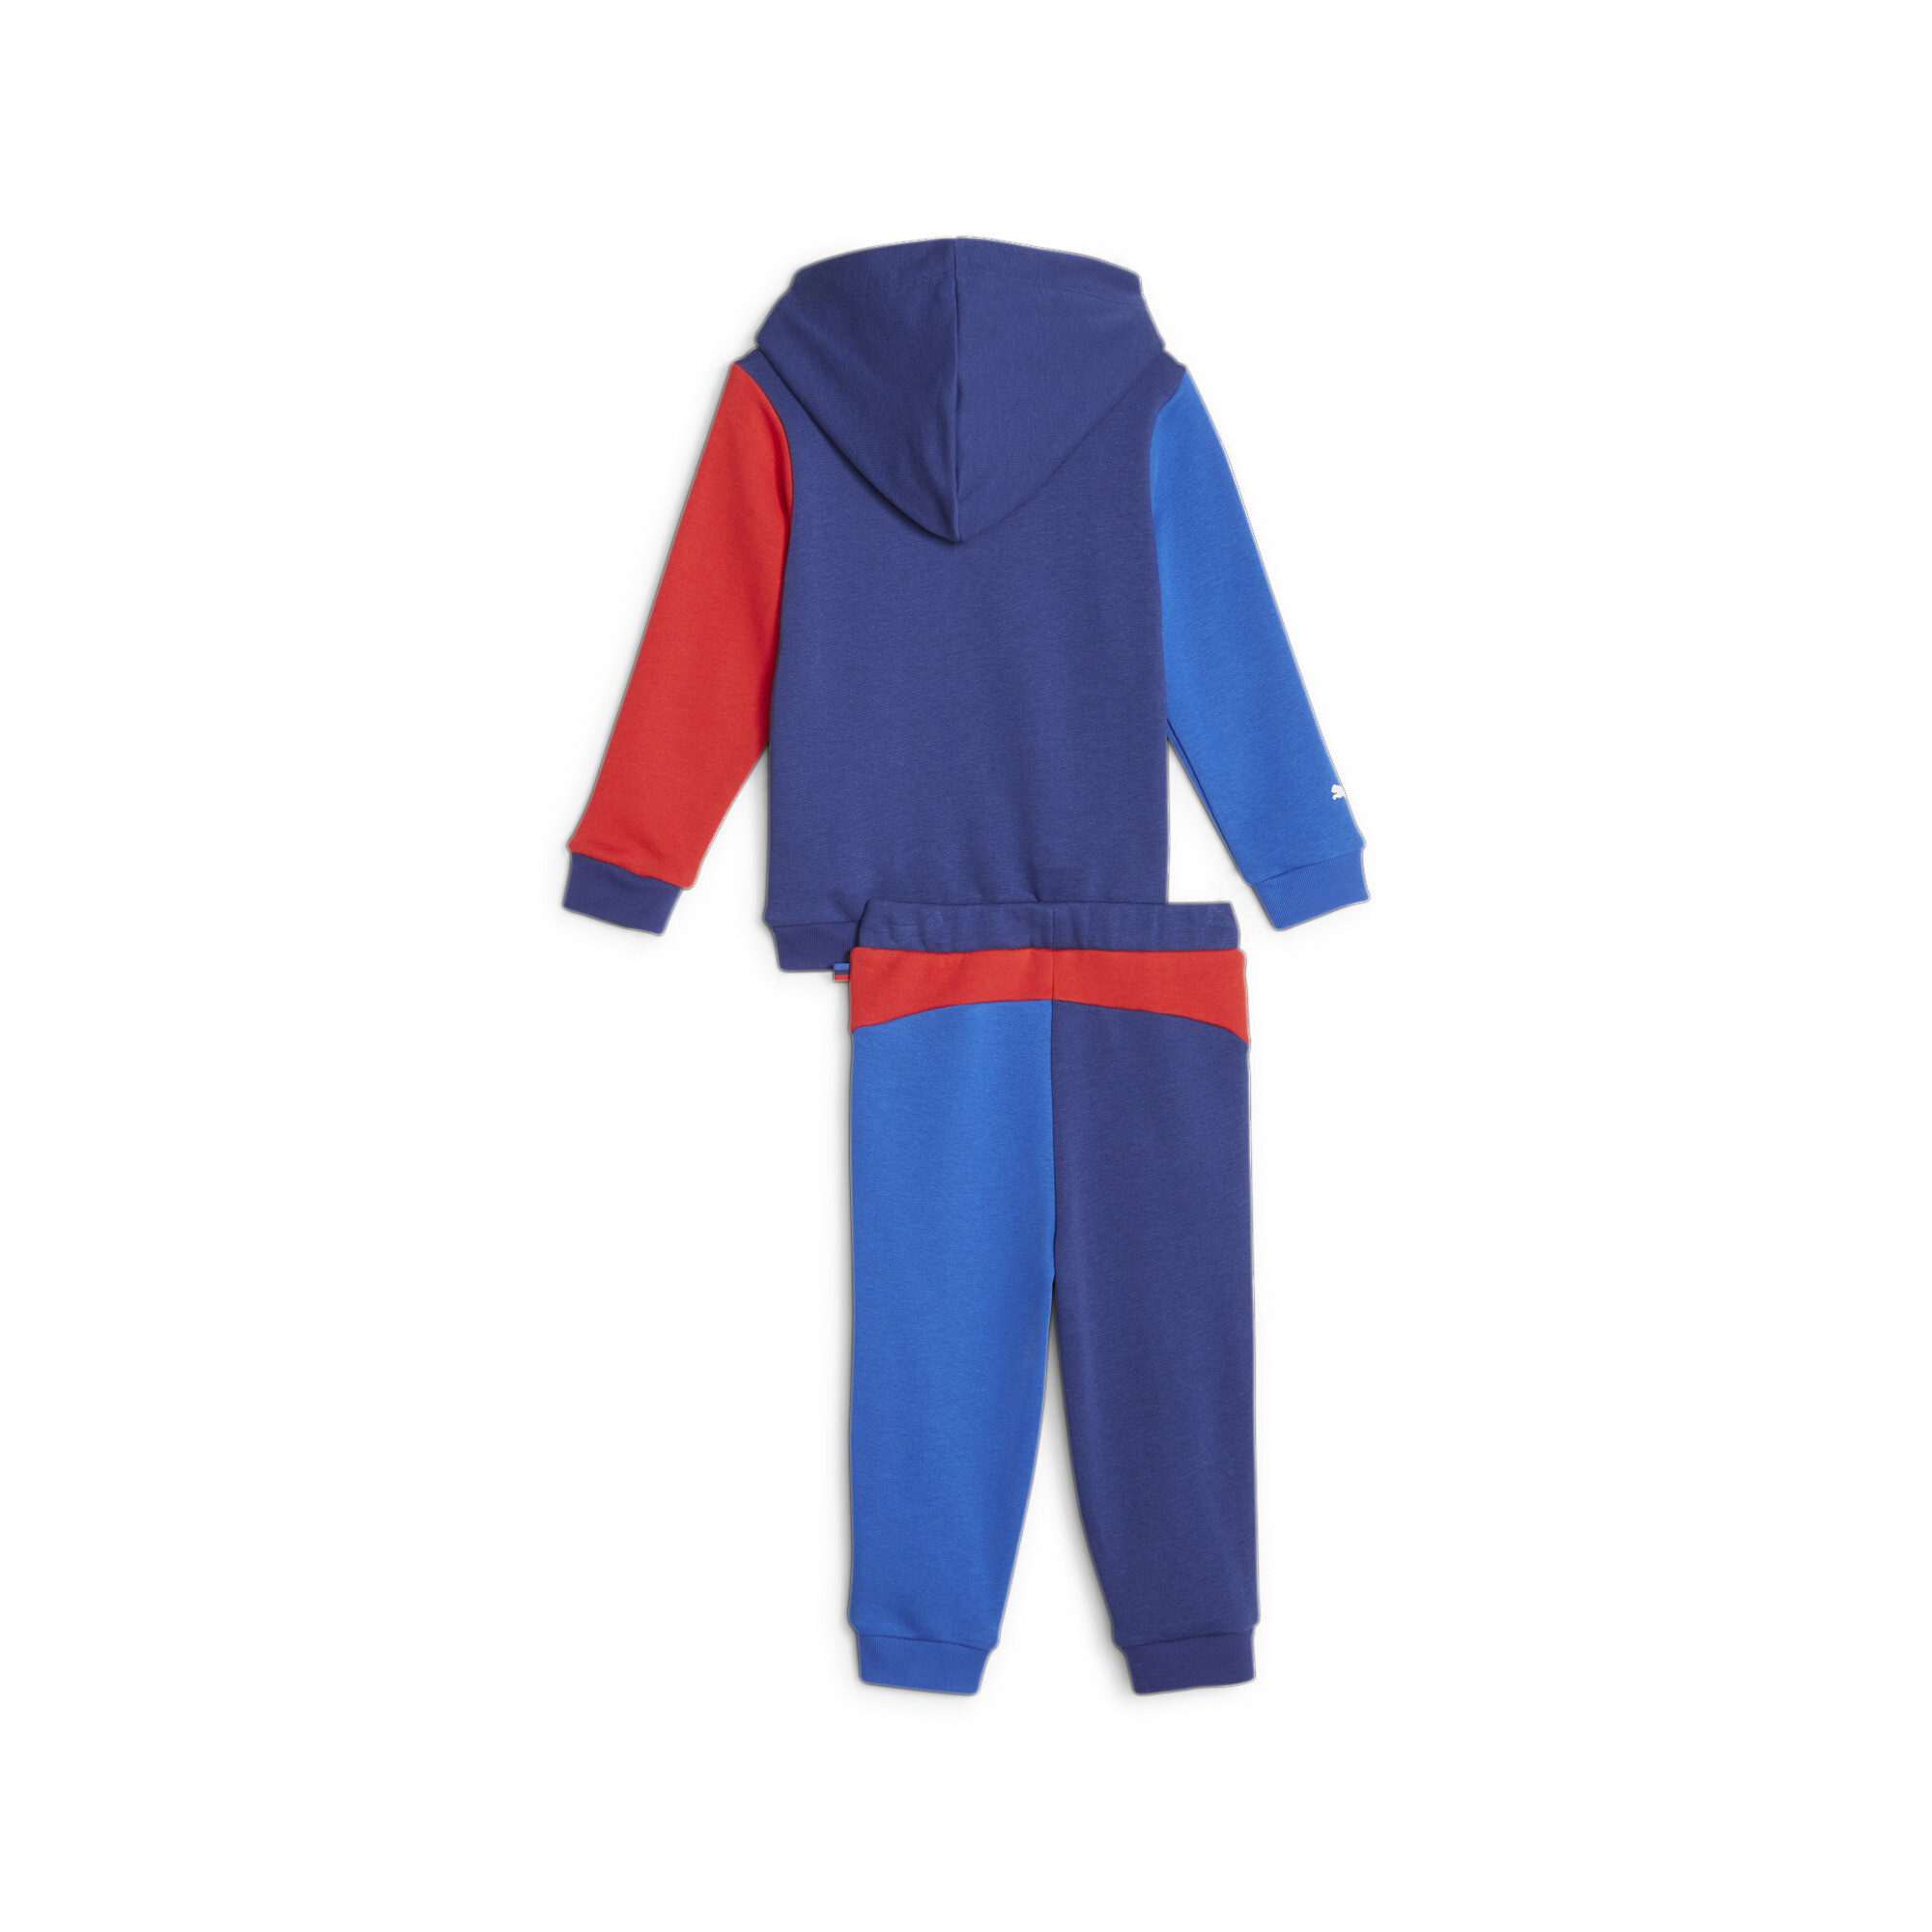 Puma BMW M Motorsport Kids' Motorsport Jogger Suit, Blue, Size 4-6M, Clothing